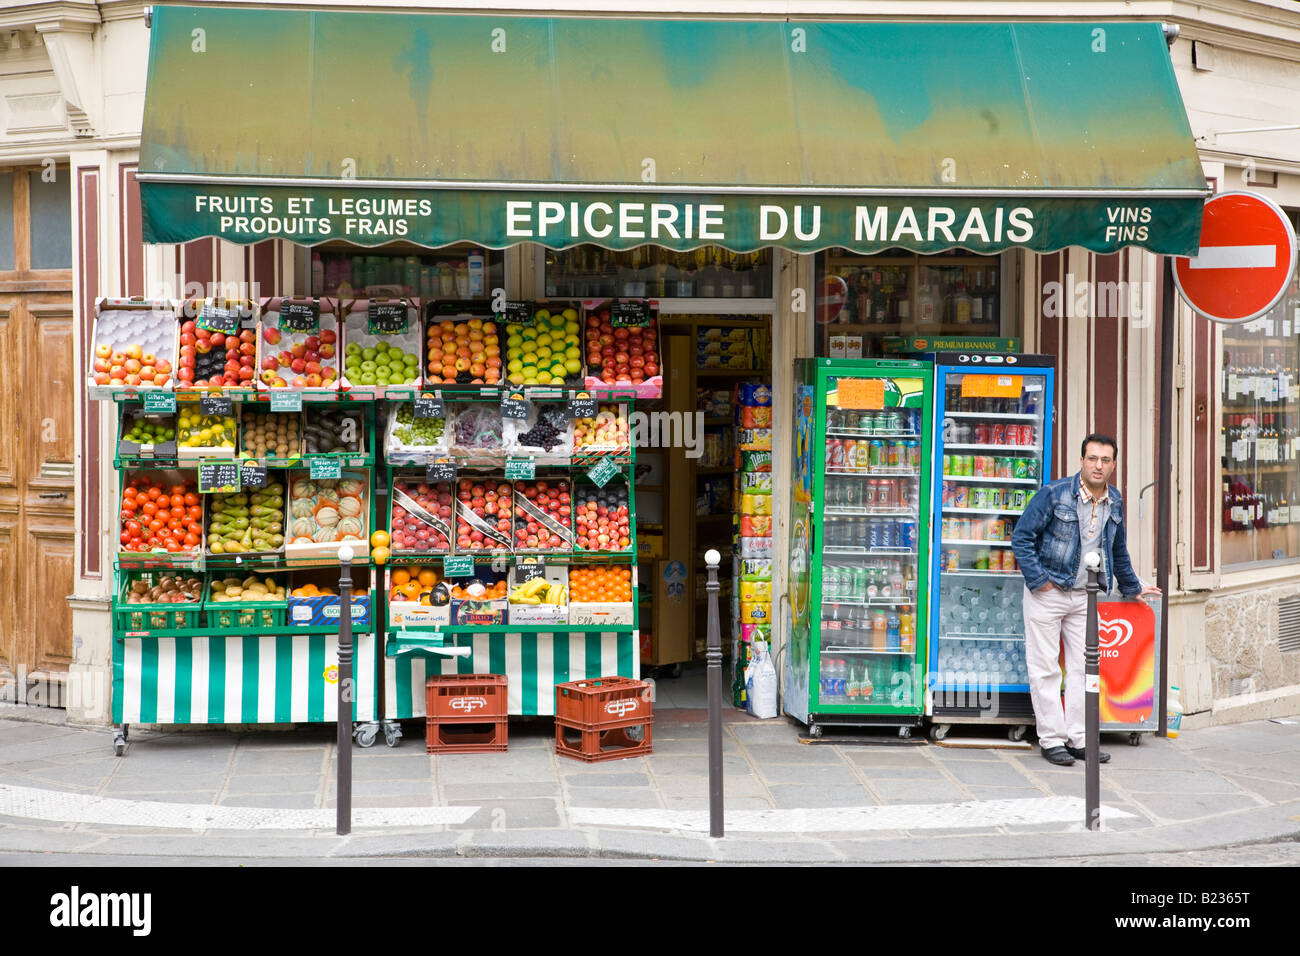 LA GRANDE EPICERIE , PARIS Stock Photo - Alamy